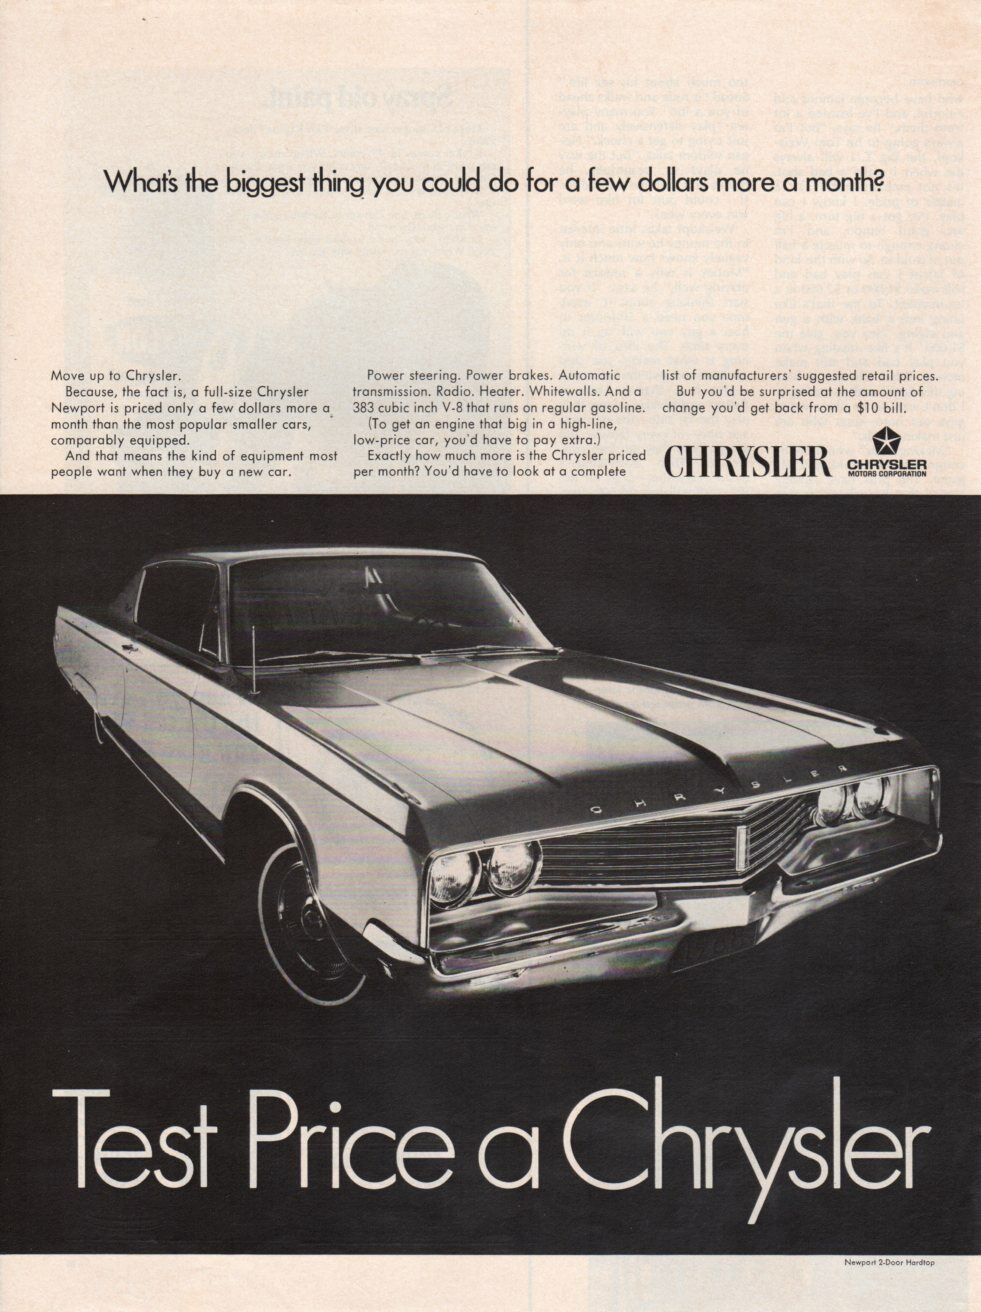 Vintage Print advertisement ad Car CHYSLER 1968 Newport 2 door Whats the Biggest